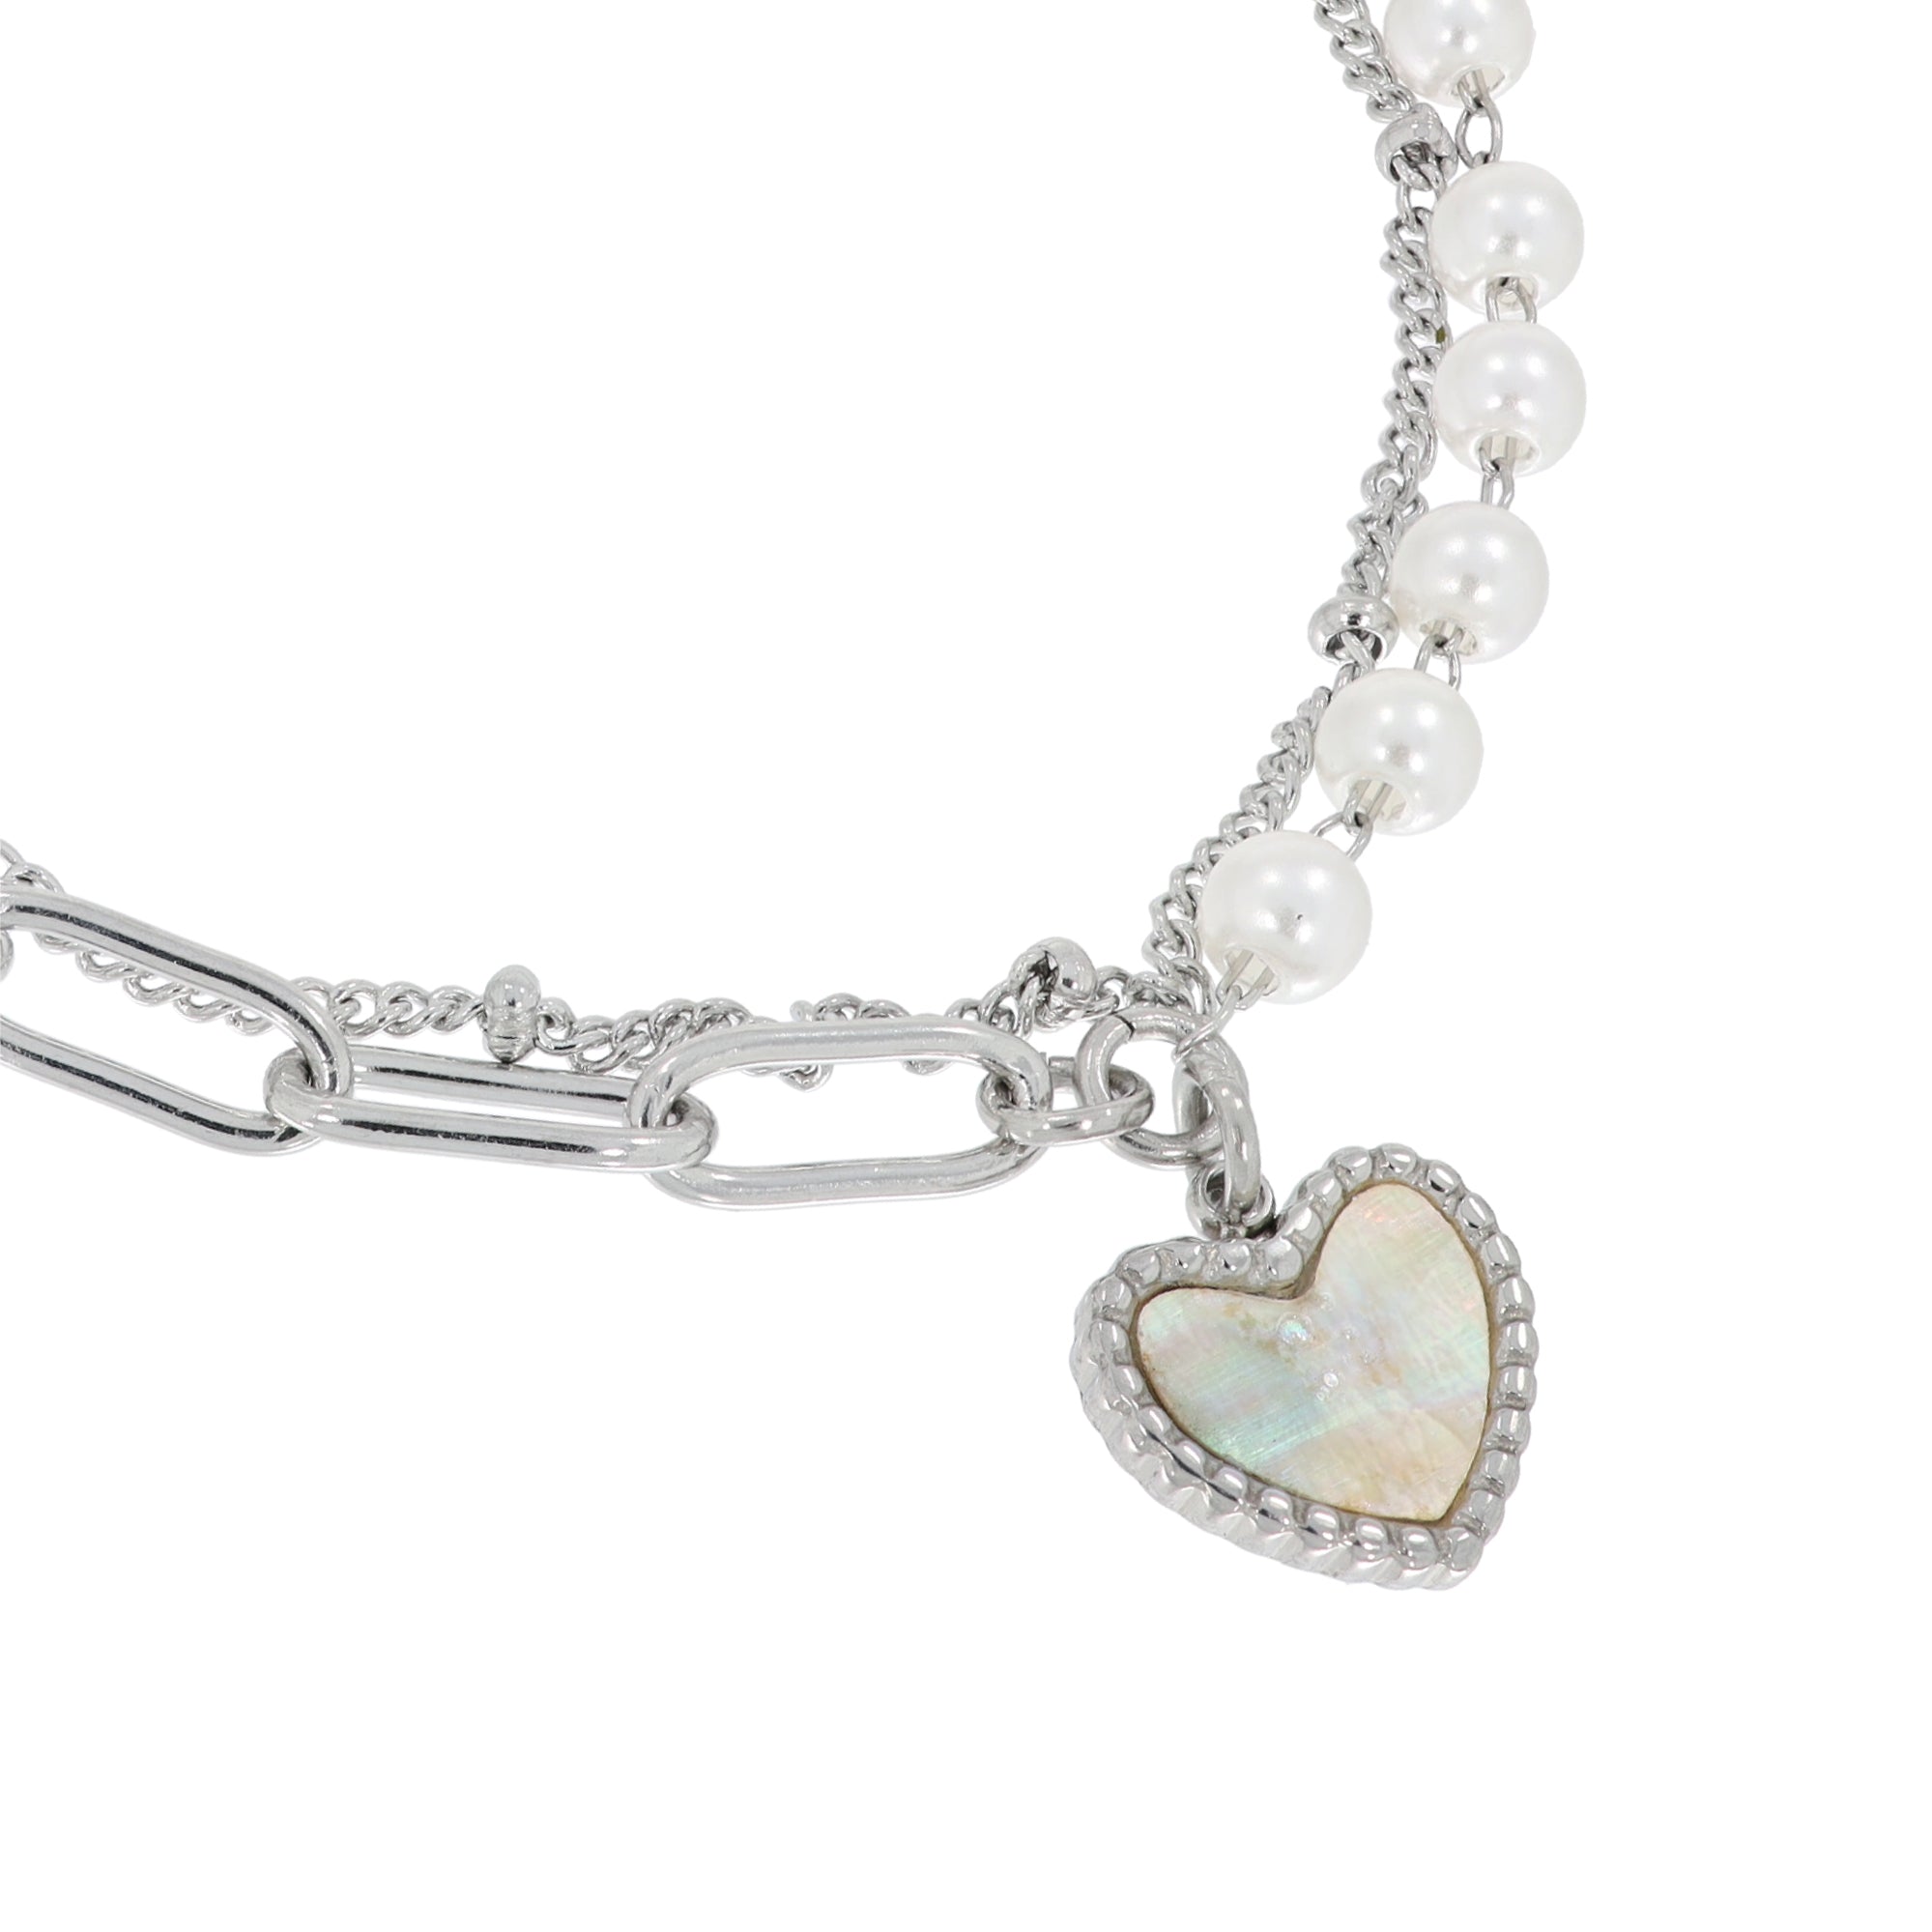 Unbalanced pearl mother-of-pearl heart bracelet